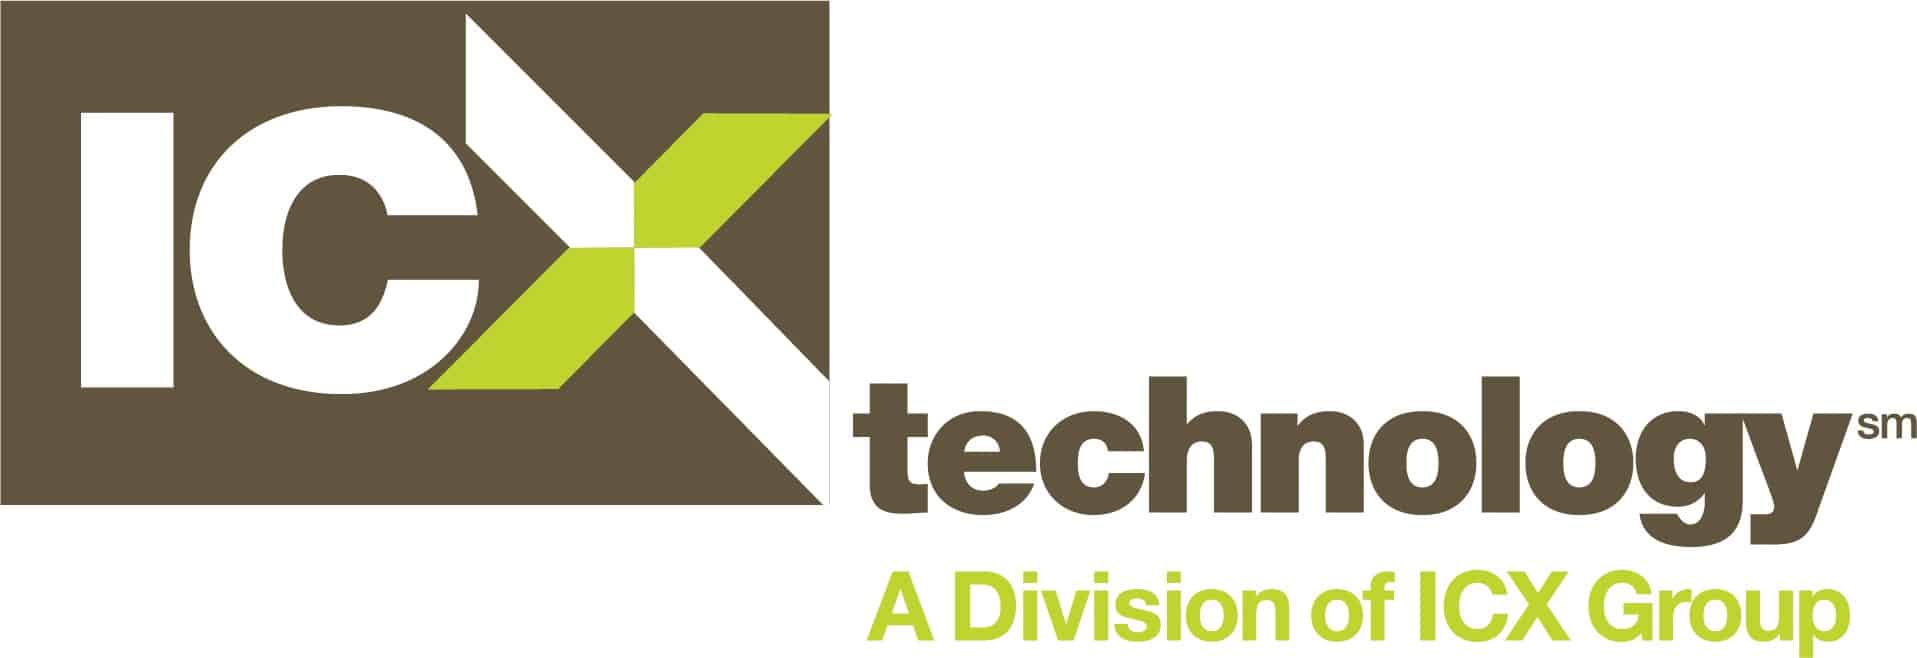 ICX Technology Logo